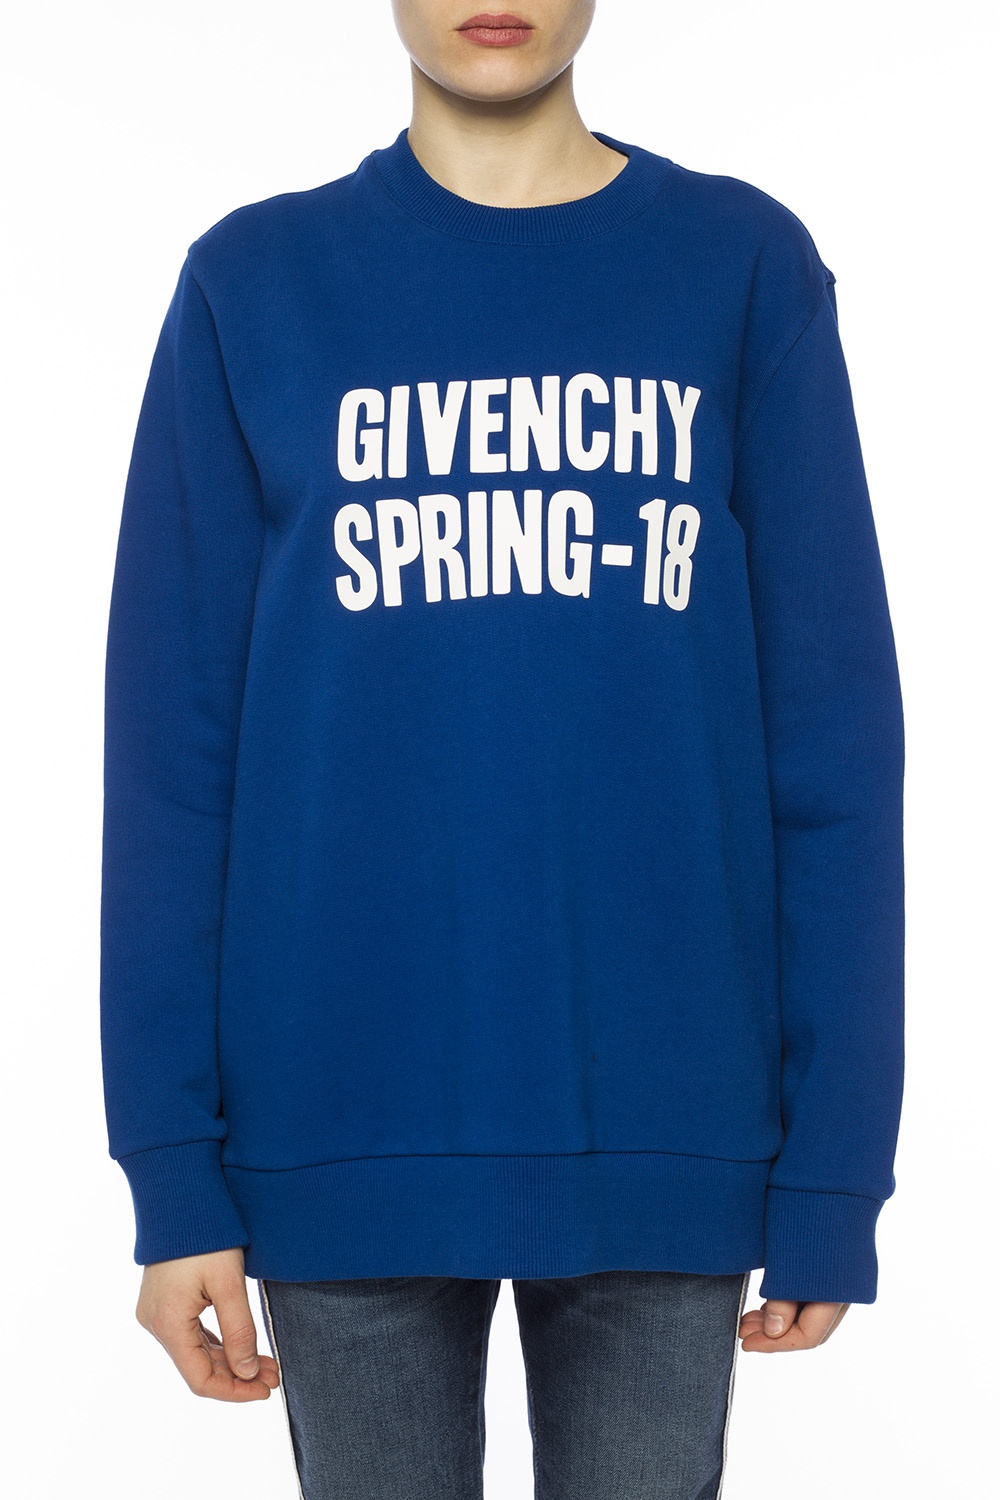 givenchy spring 18 t shirt